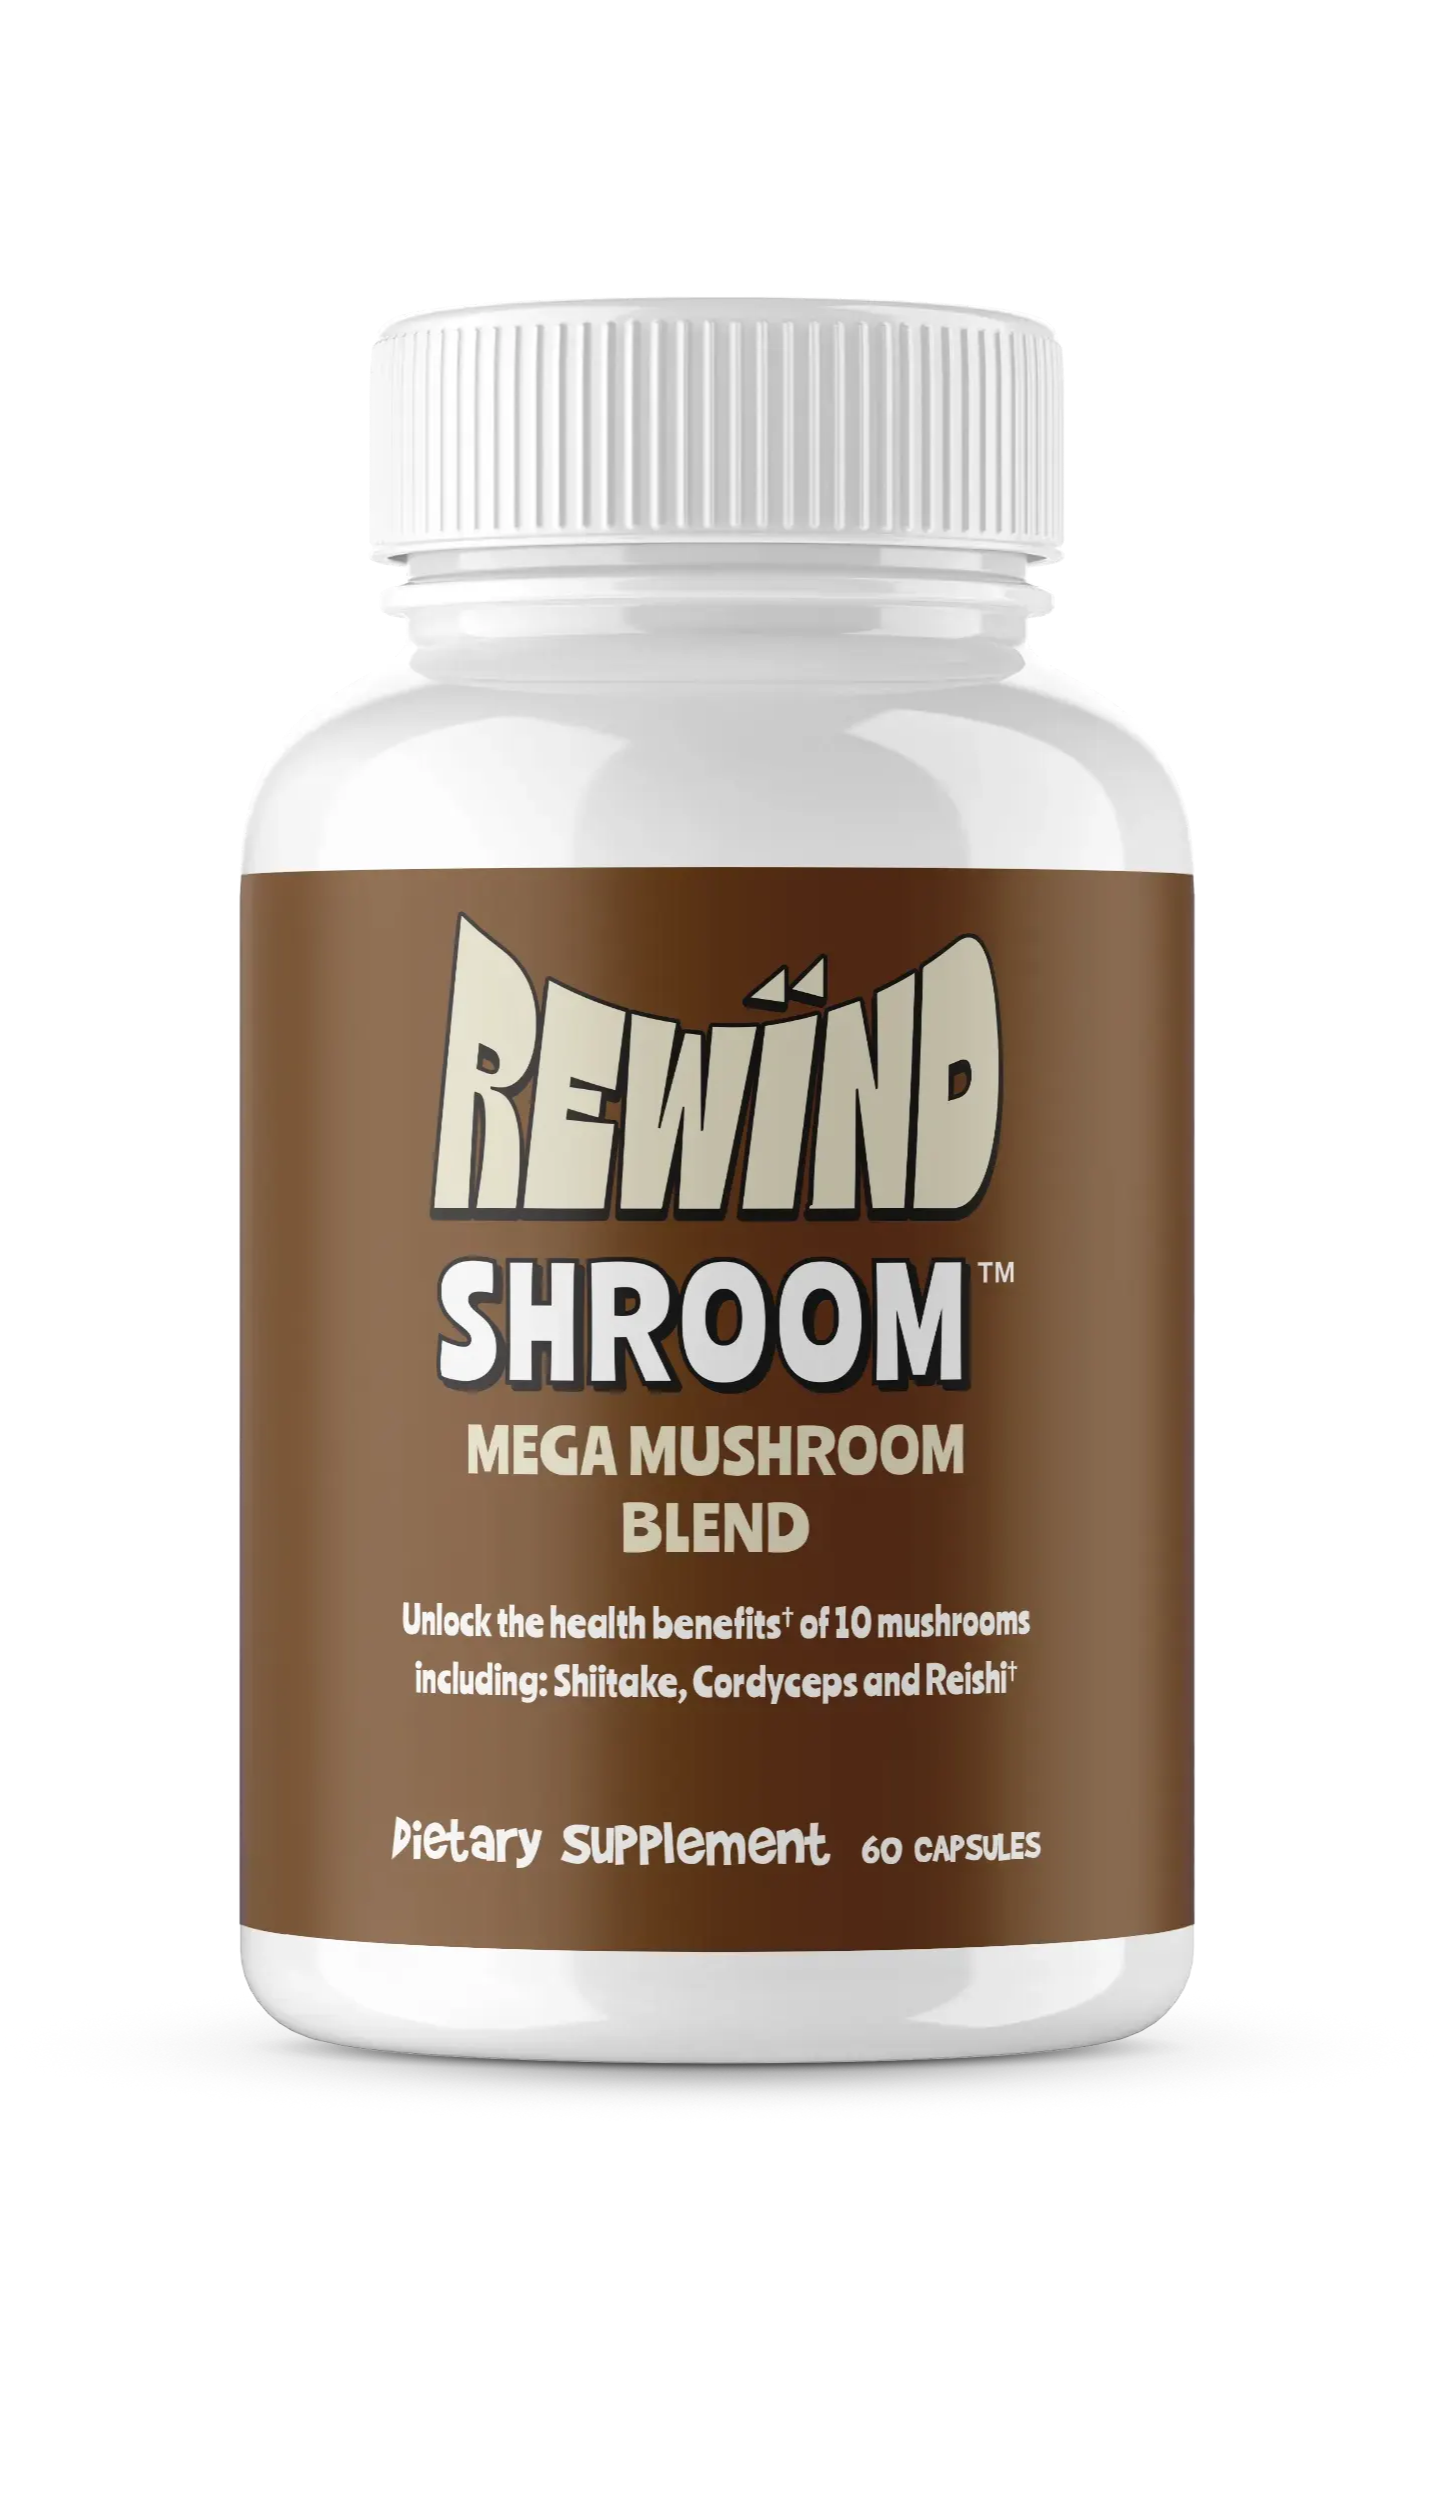 Huge Rewind Shroom Bottle Mega Mushroom Blend